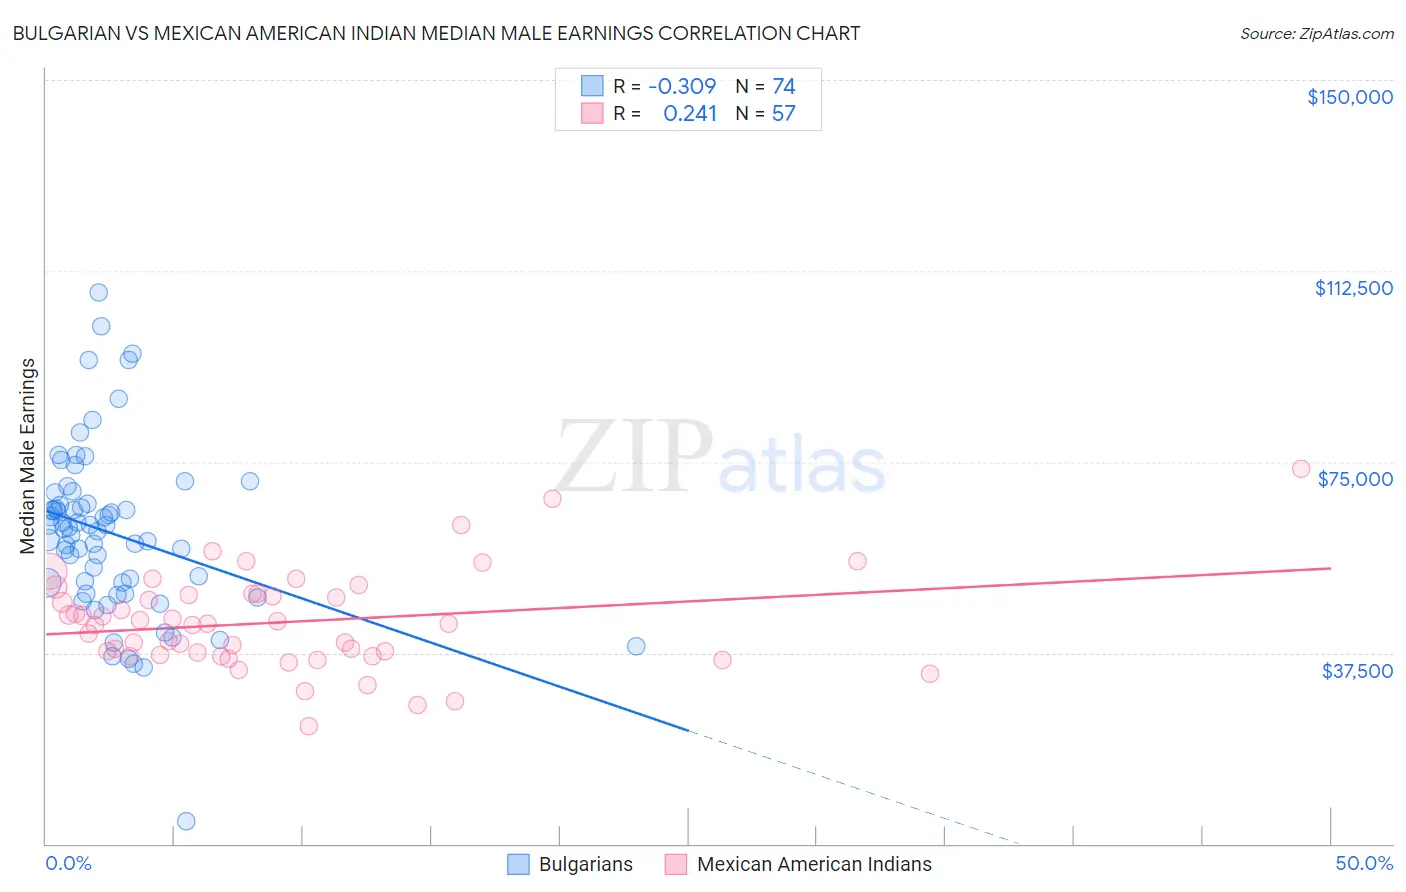 Bulgarian vs Mexican American Indian Median Male Earnings